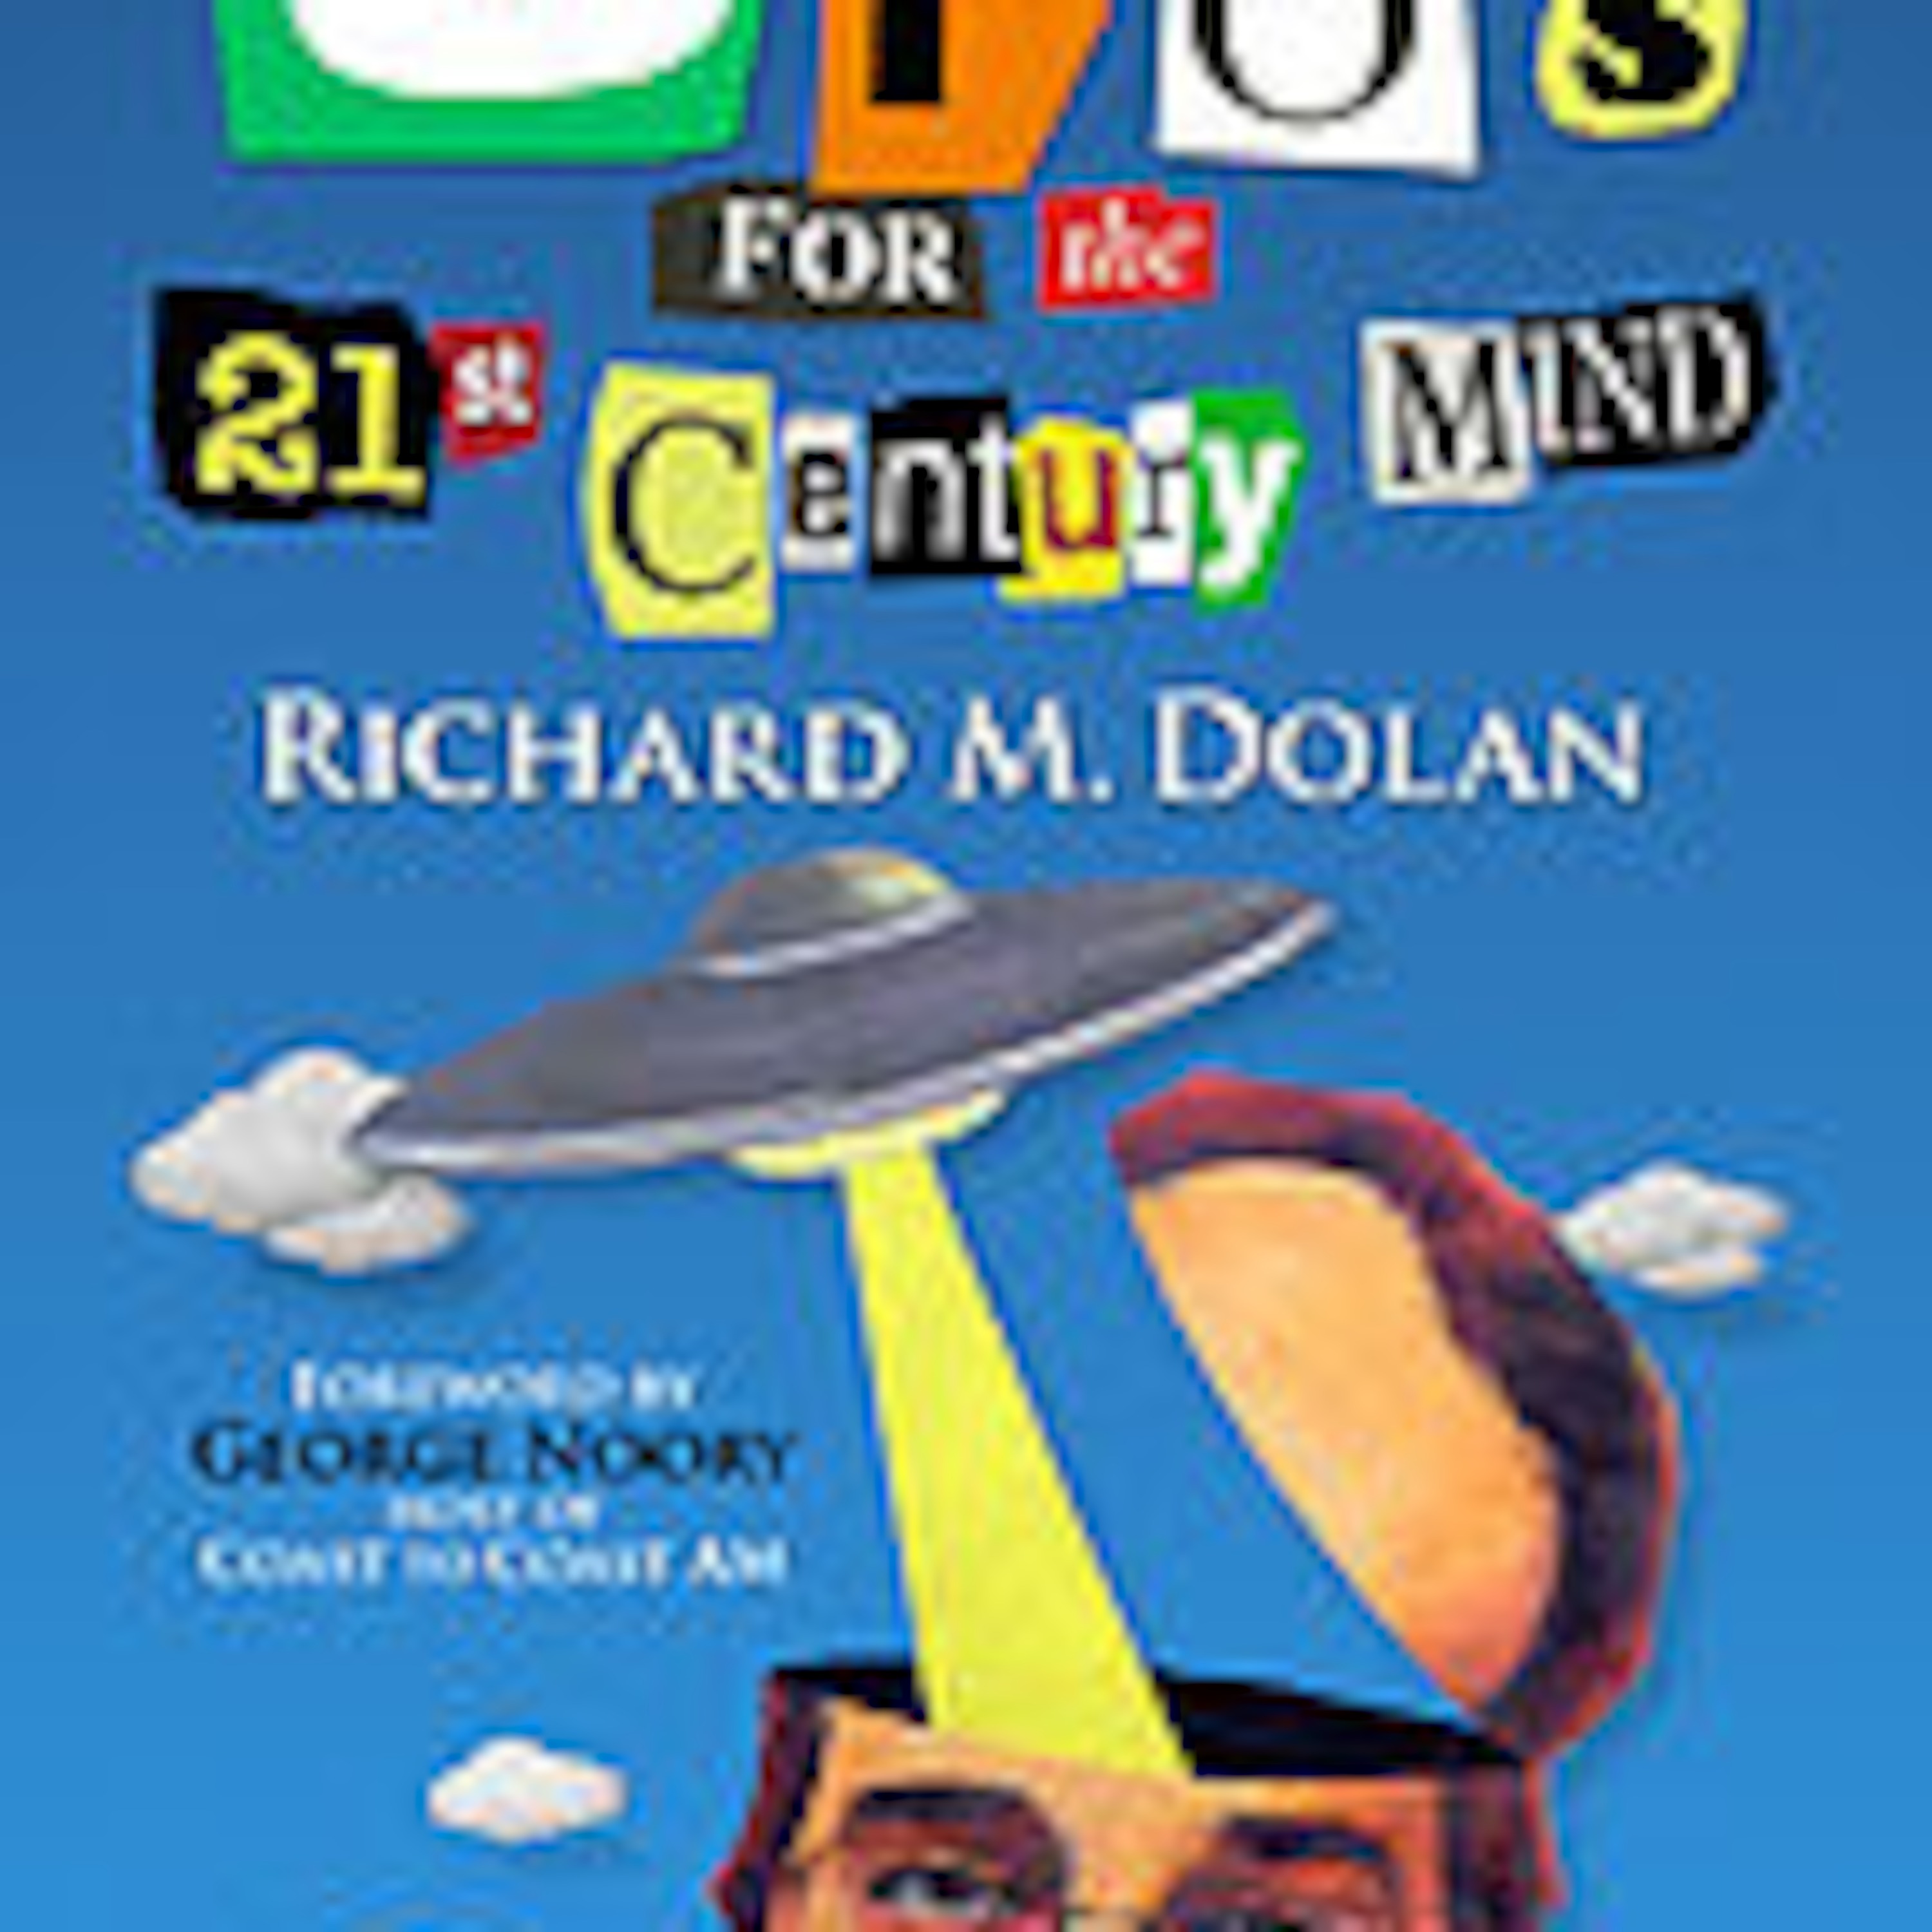 Conspirinormal Episode 126- Richard Dolan (UFOs for the 21st Century Mind)